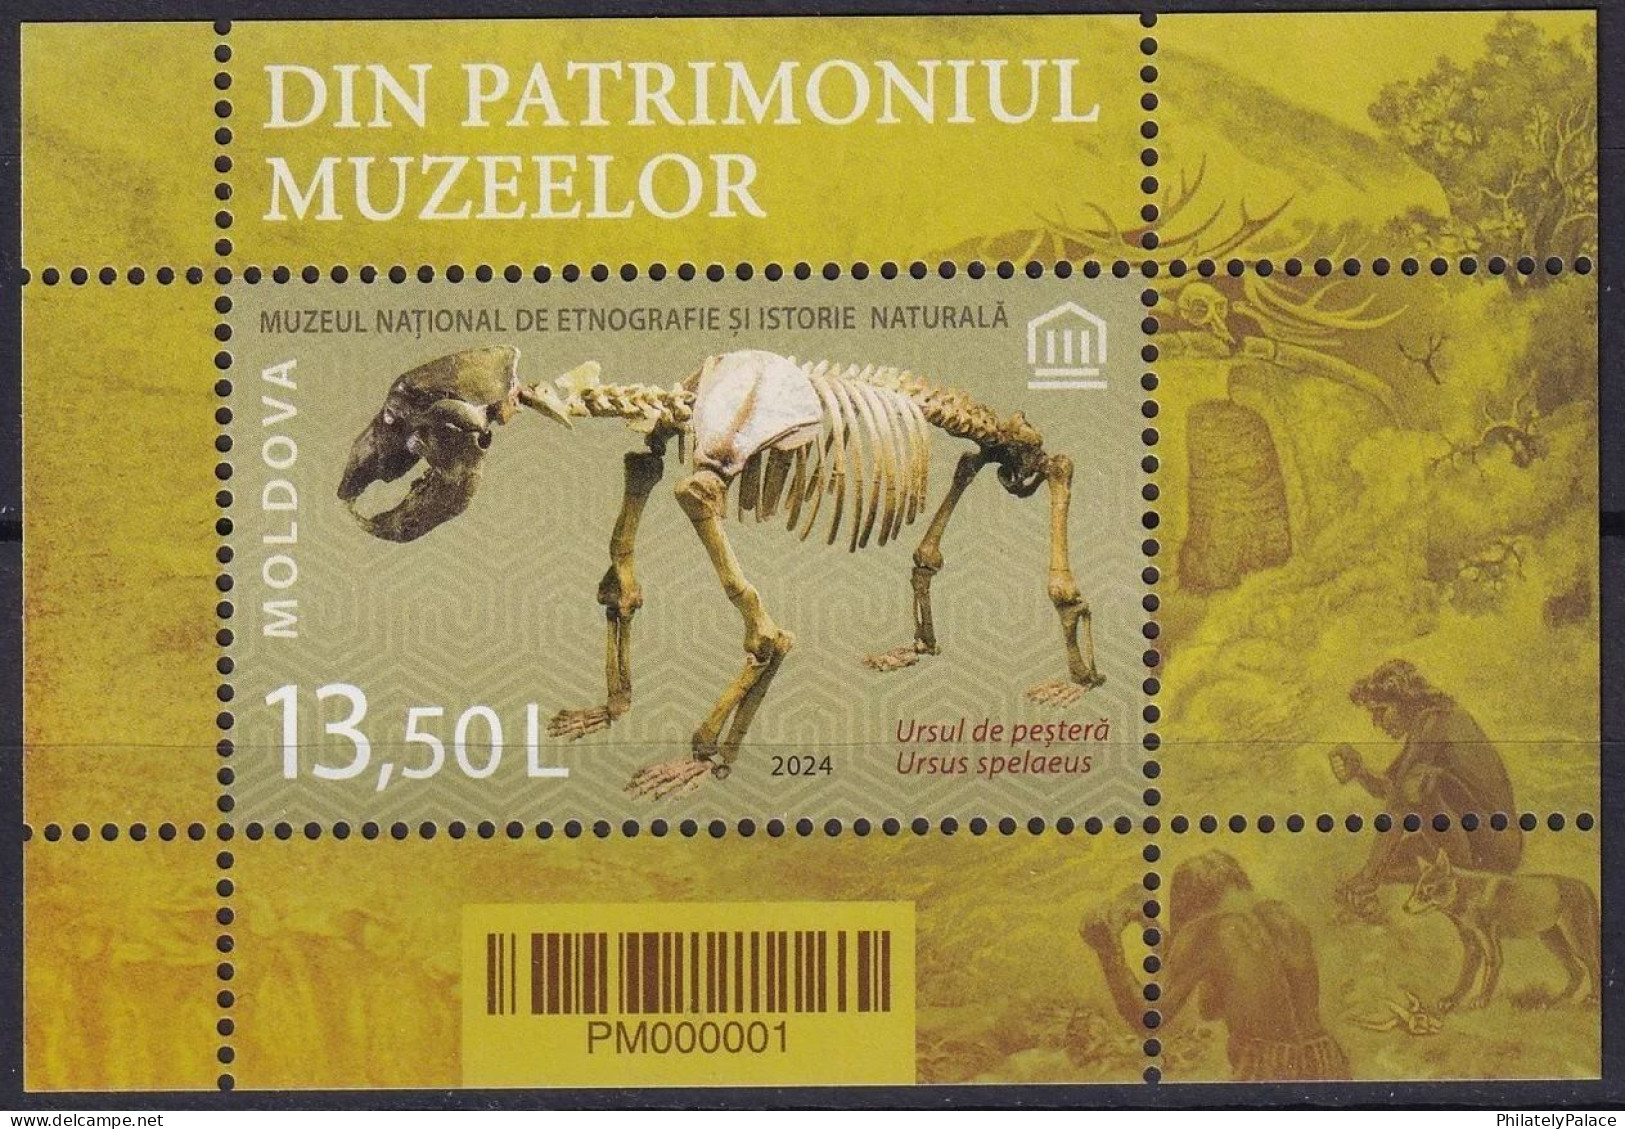 MOLDOVA 2024 Museum Artifacts & Natural History,Cave Bear,Fox,Pre Human Ancestor,Male,Female, MNH (**) - Moldova